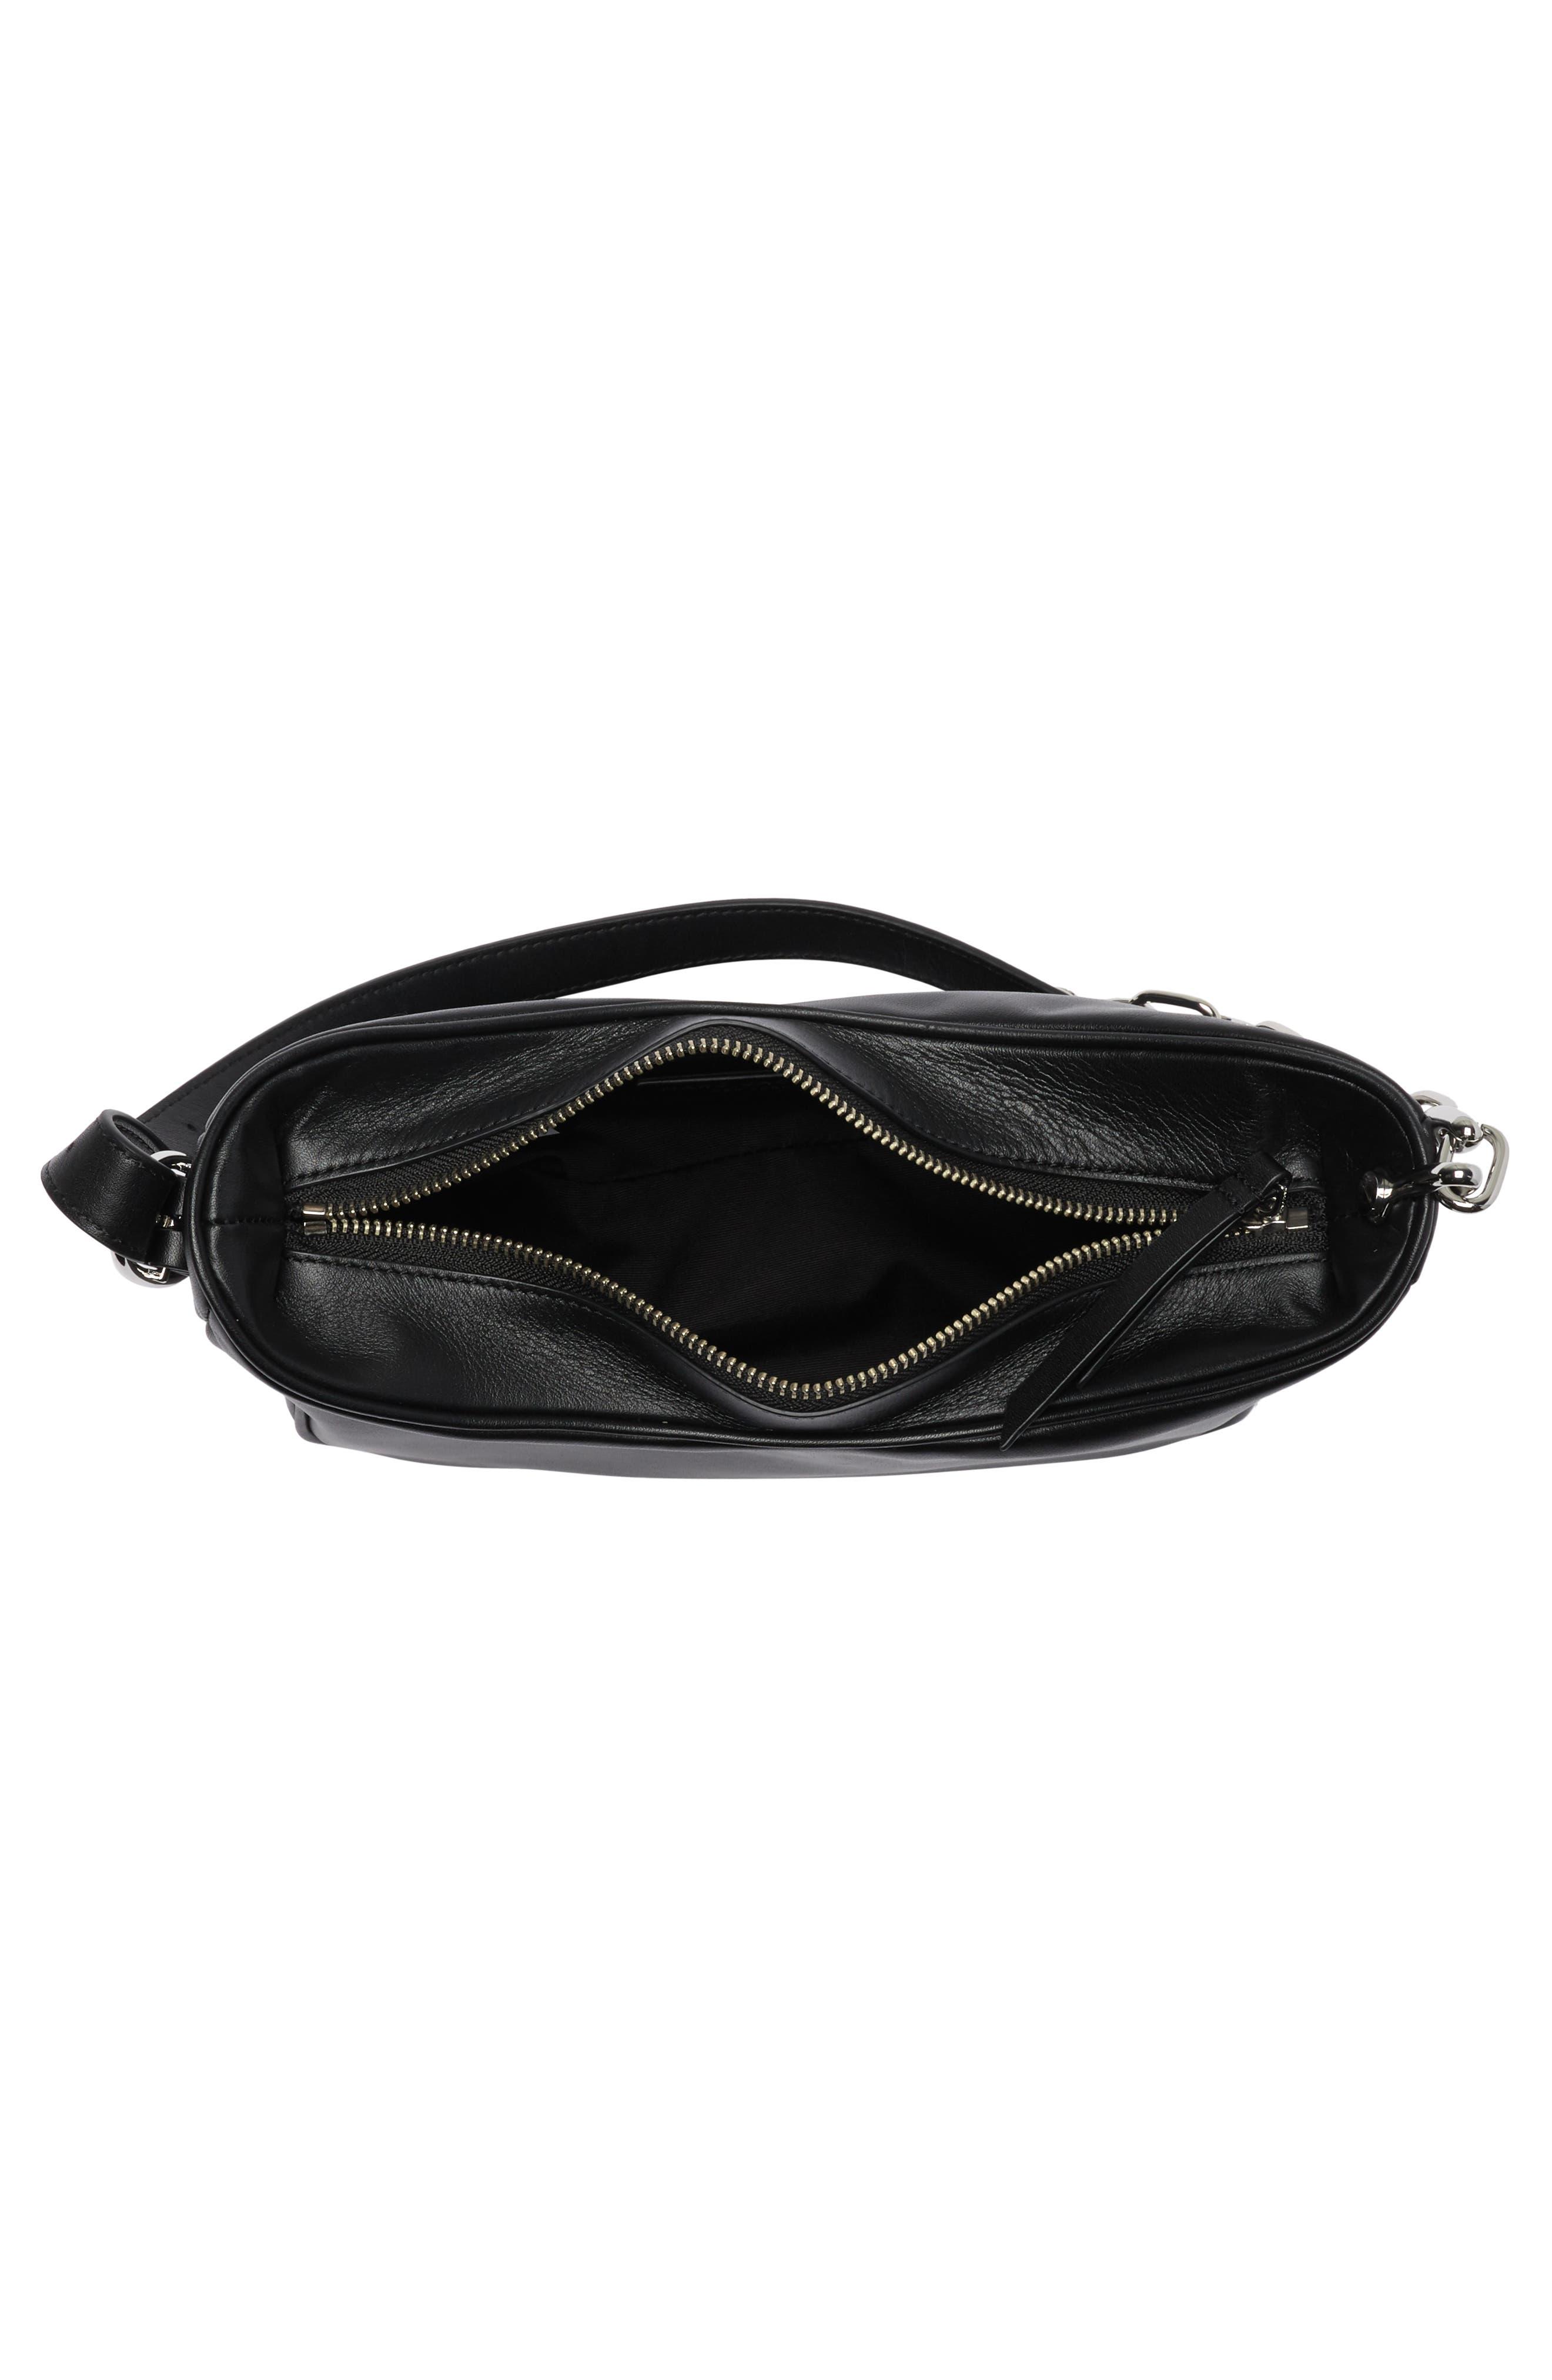 Marc Jacobs Tempo Shoulder Bag Black $395 NWT